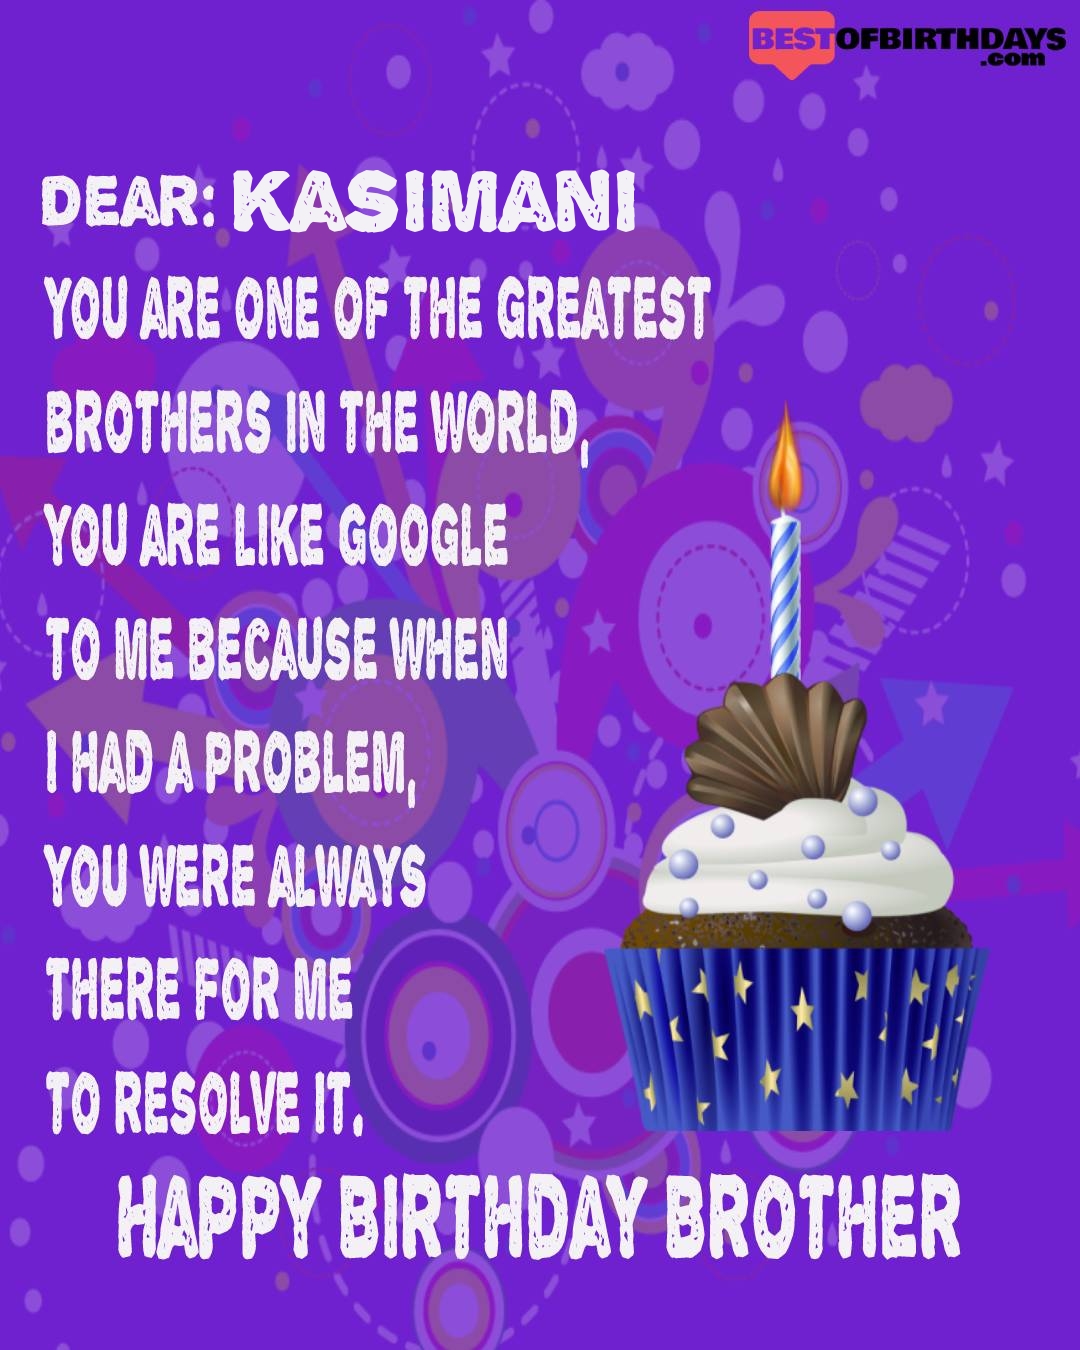 Happy birthday kasimani bhai brother bro